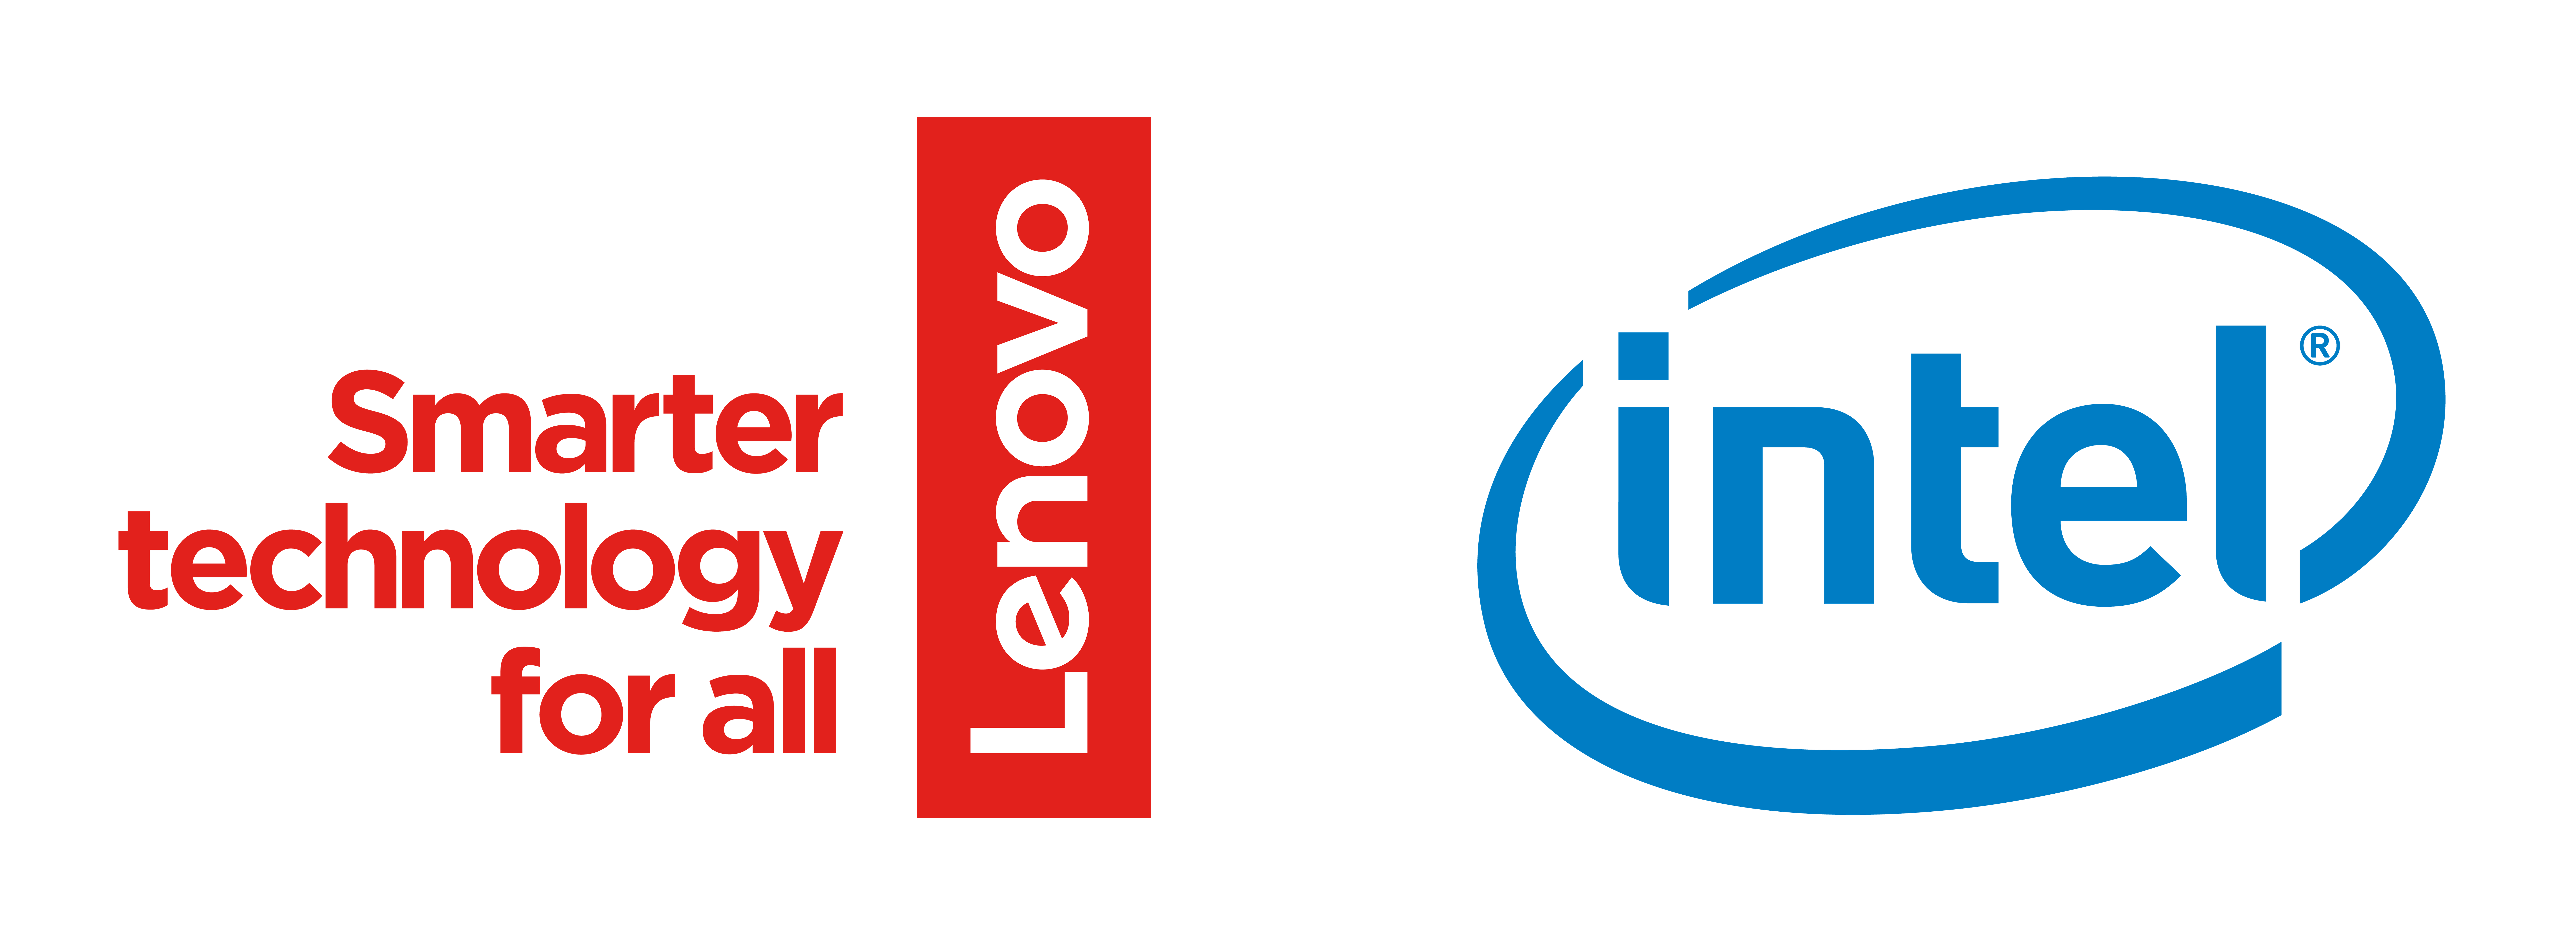 Lenovo Intel logo